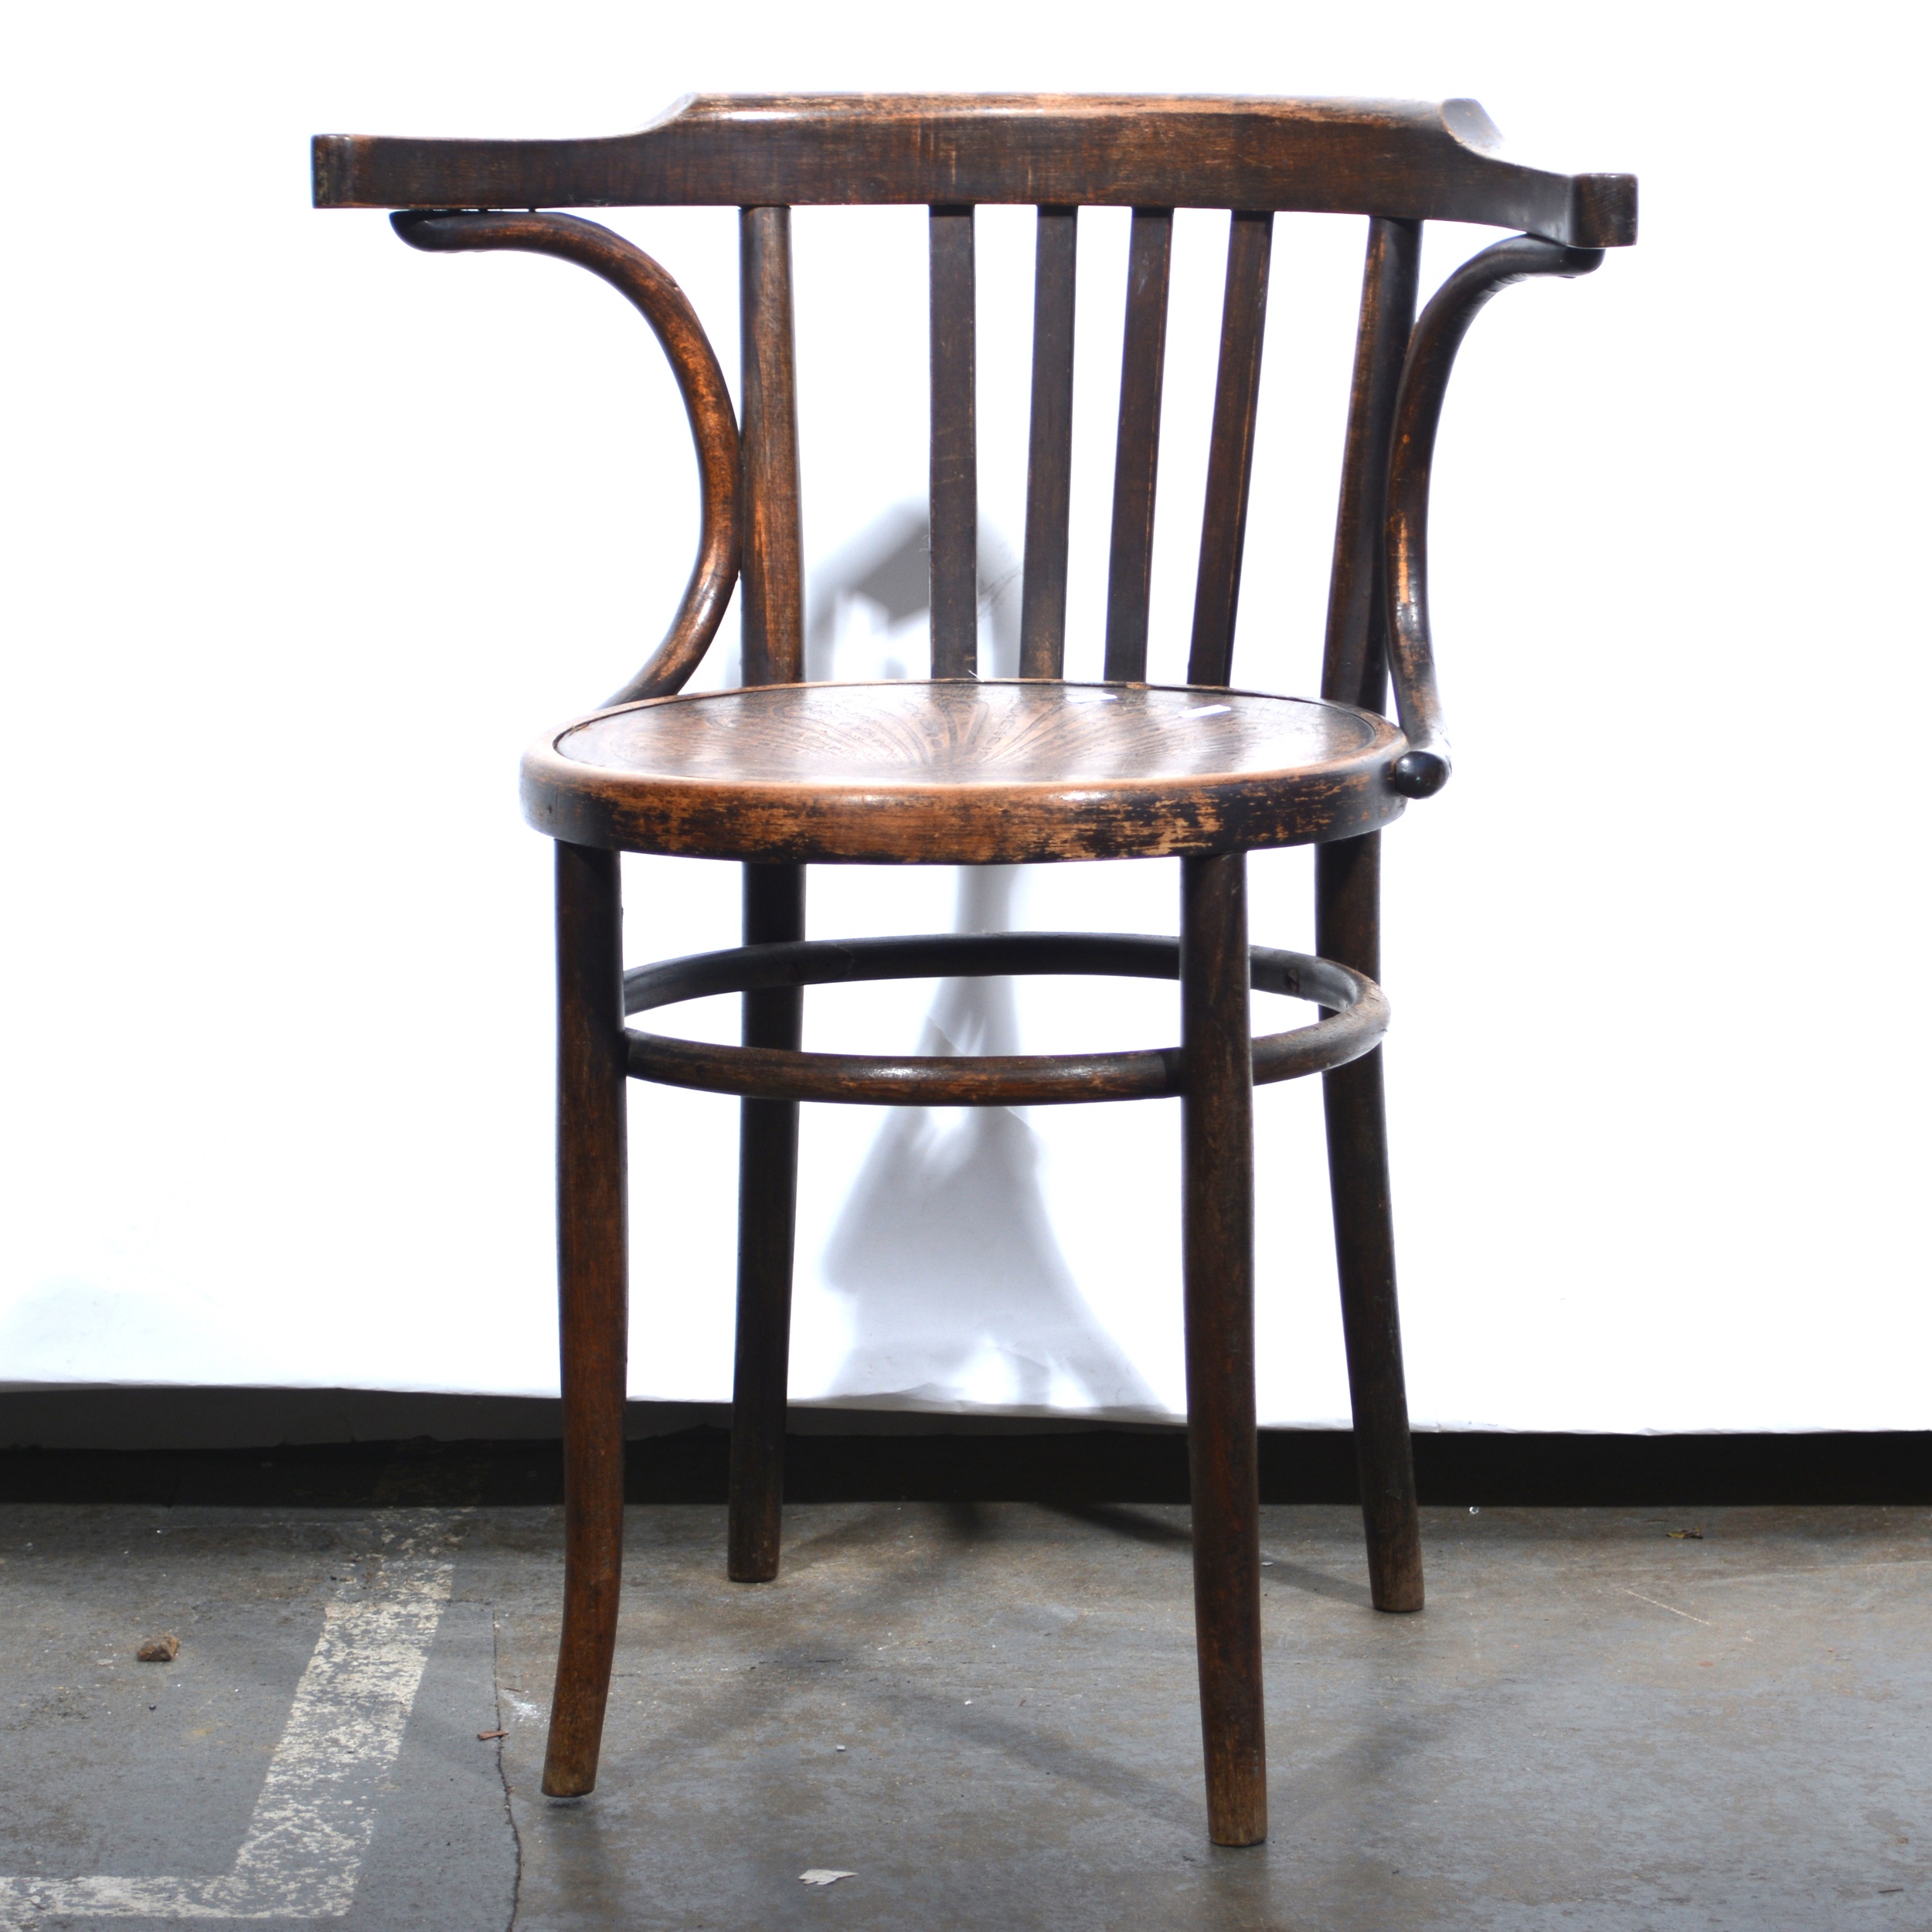 Bentwood chair labelled Fischel